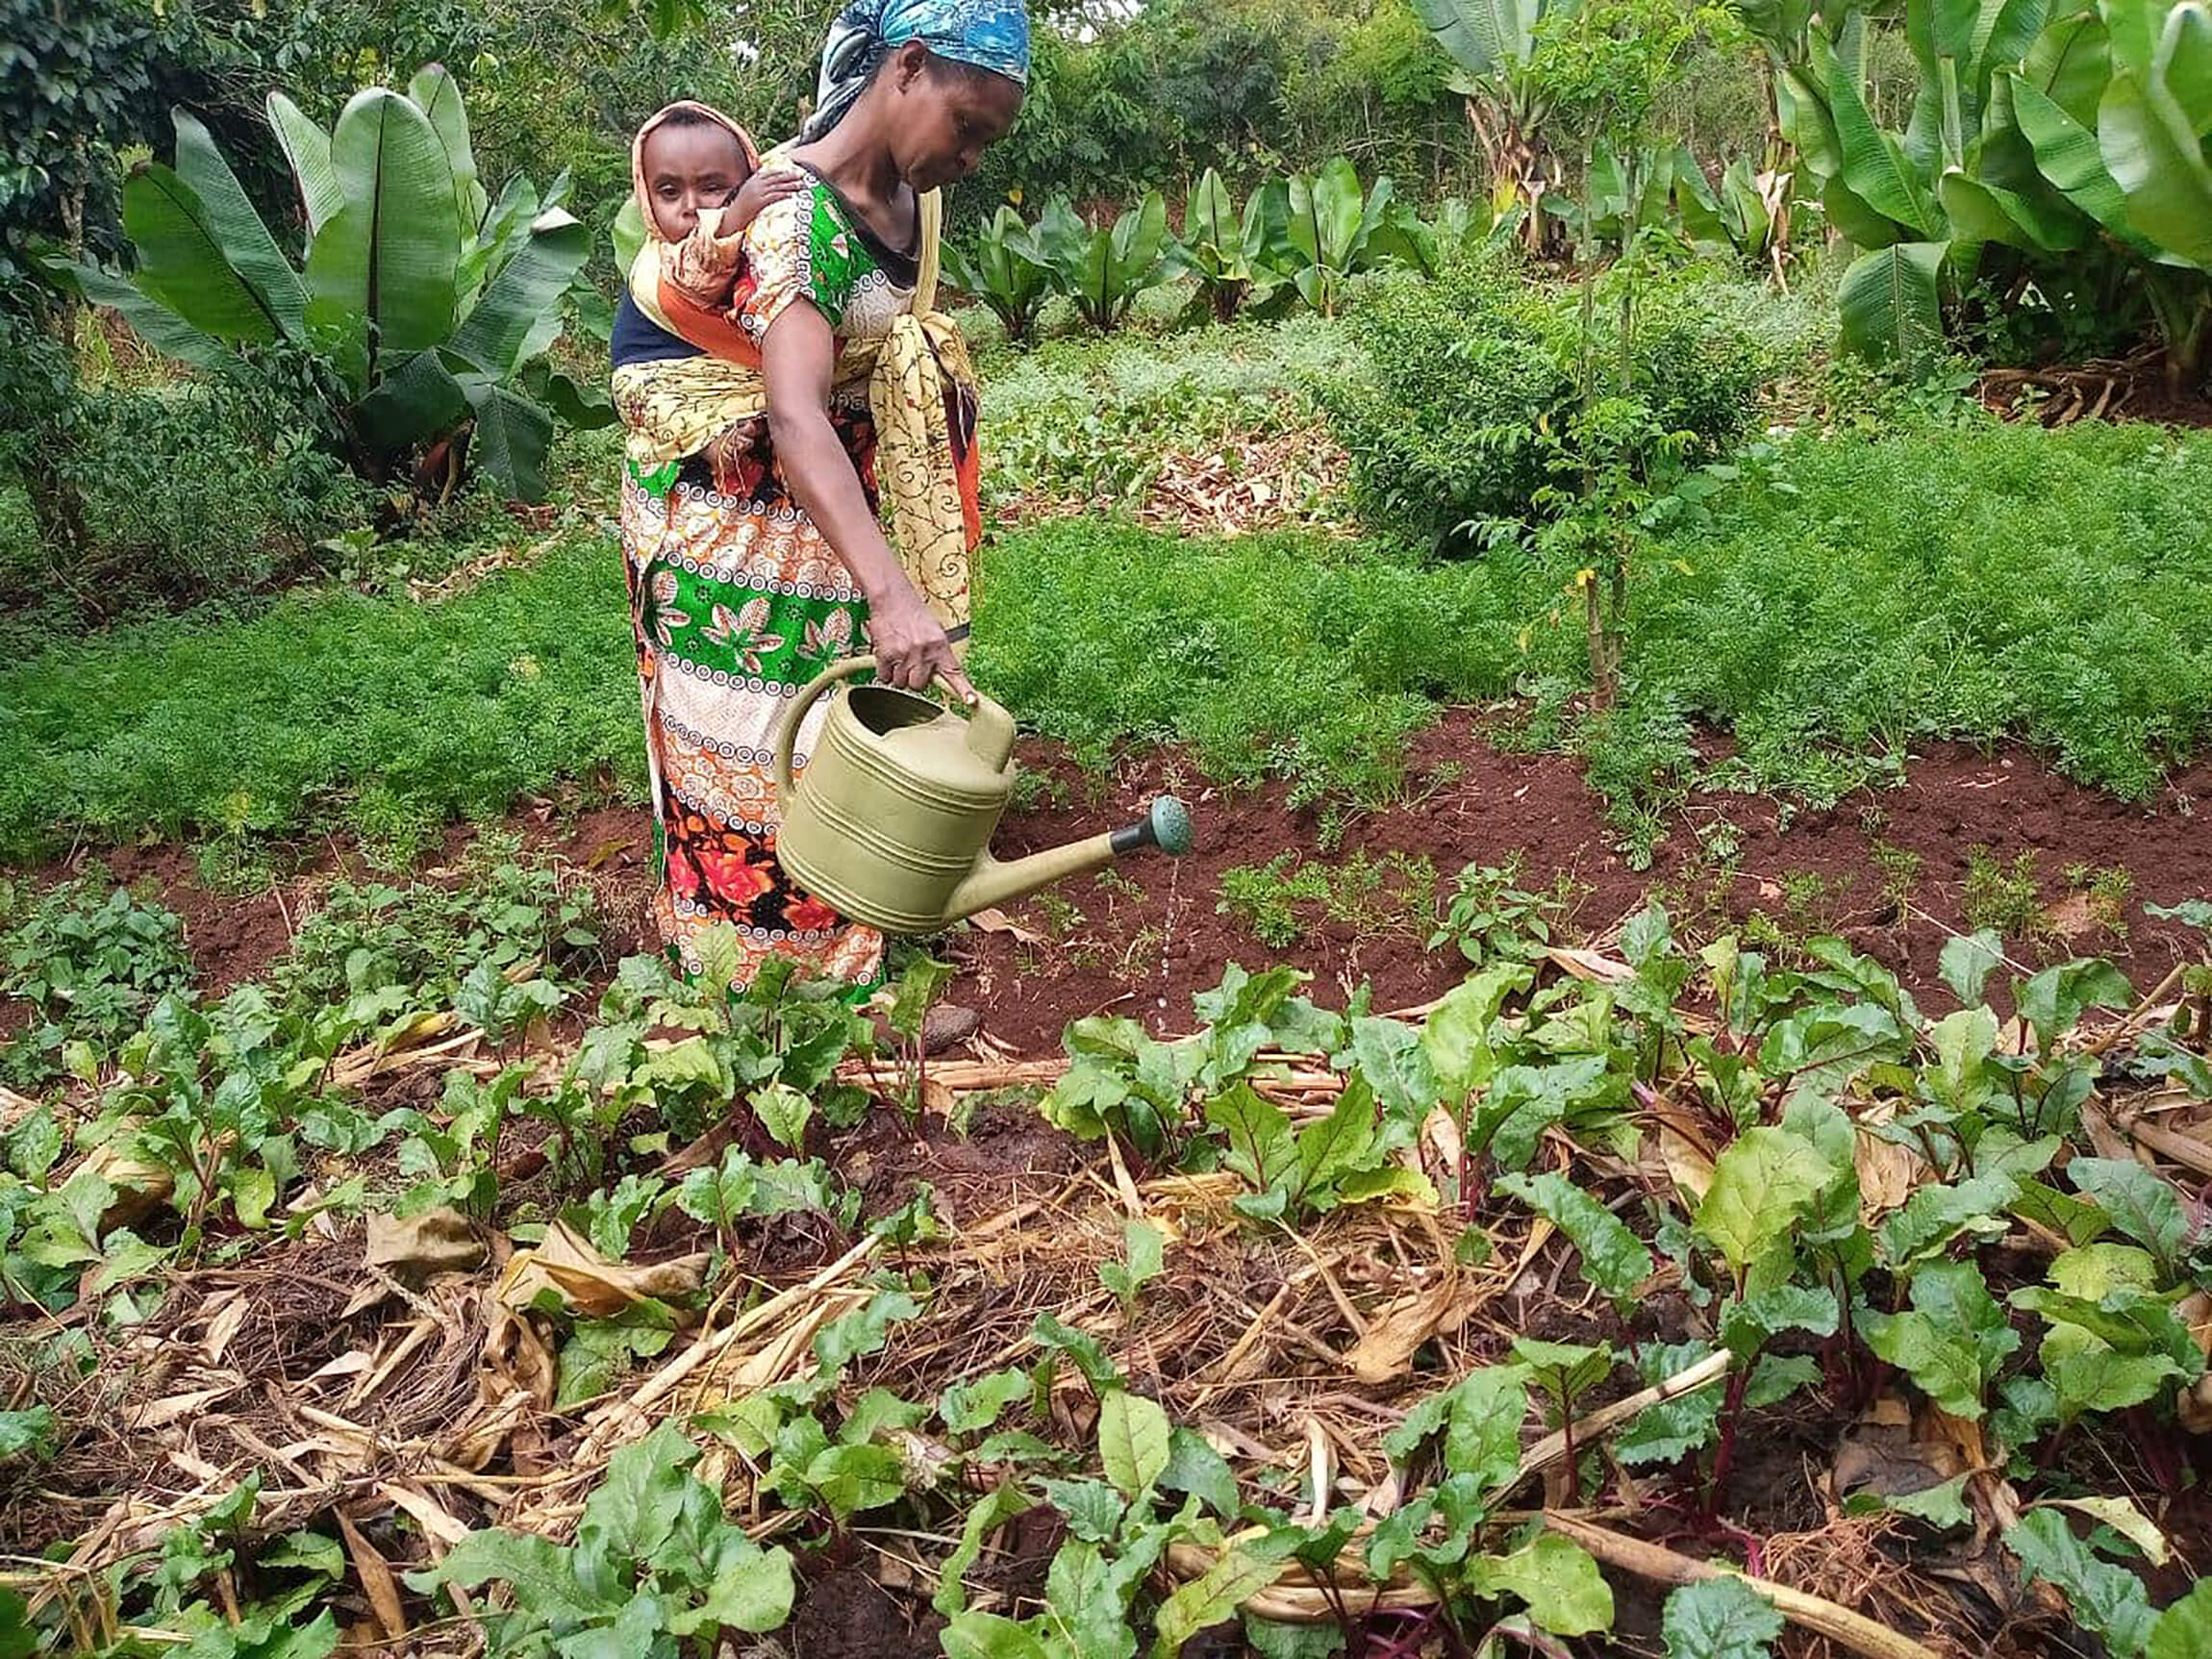 Birhanesh Beyene carries her 18-month-old son, Abenezer, on her back while watering her vegetable garden.